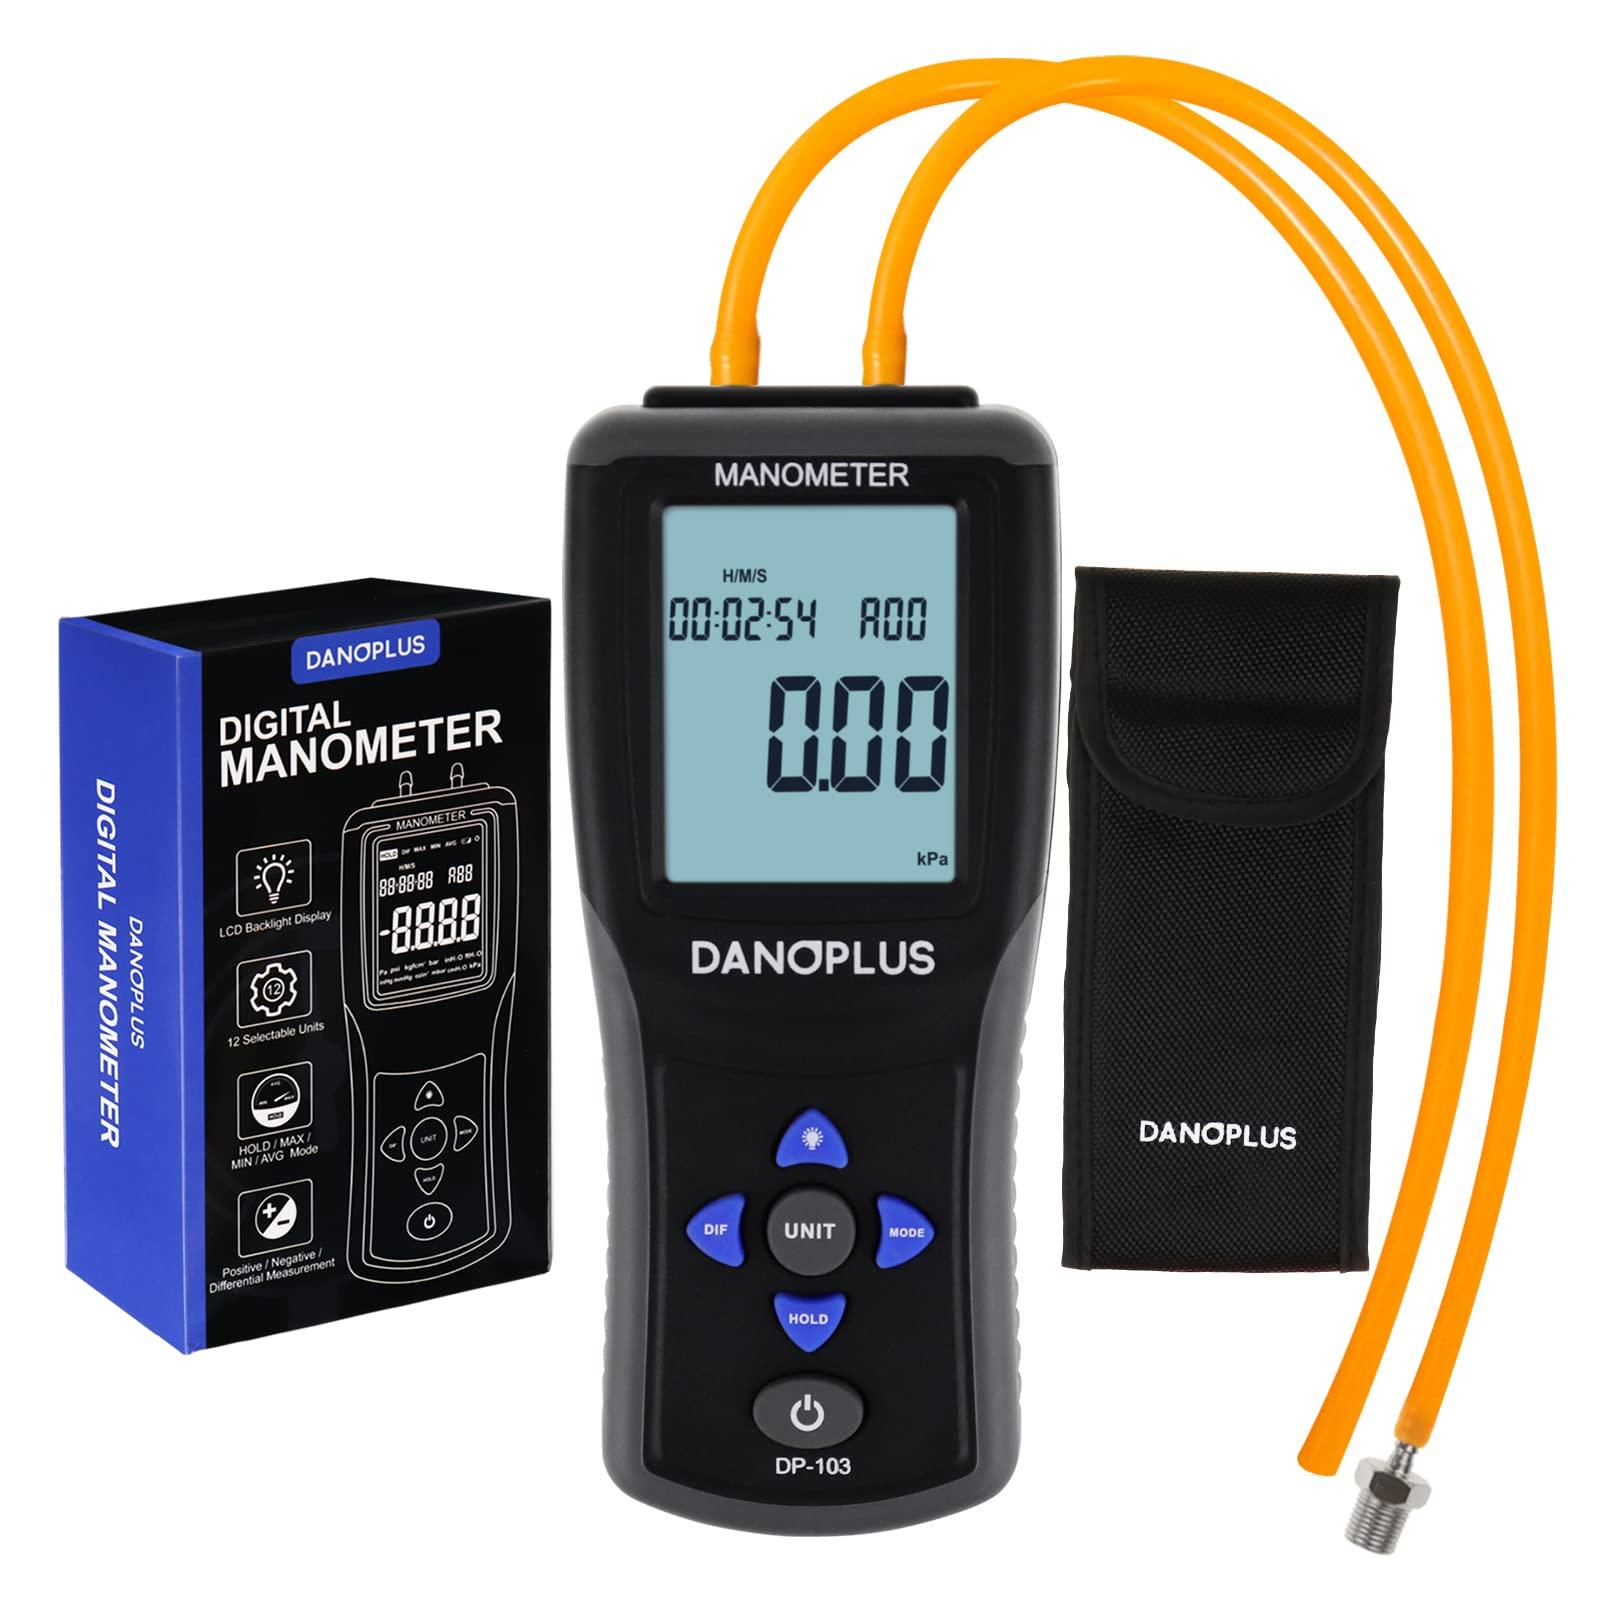 DANOPLUS DP-103 Manometer Digital Gas Pressure Tester Differential Pressure Gauge HVAC Air Pressure Meter with Backlight Data Record Function,Black 0